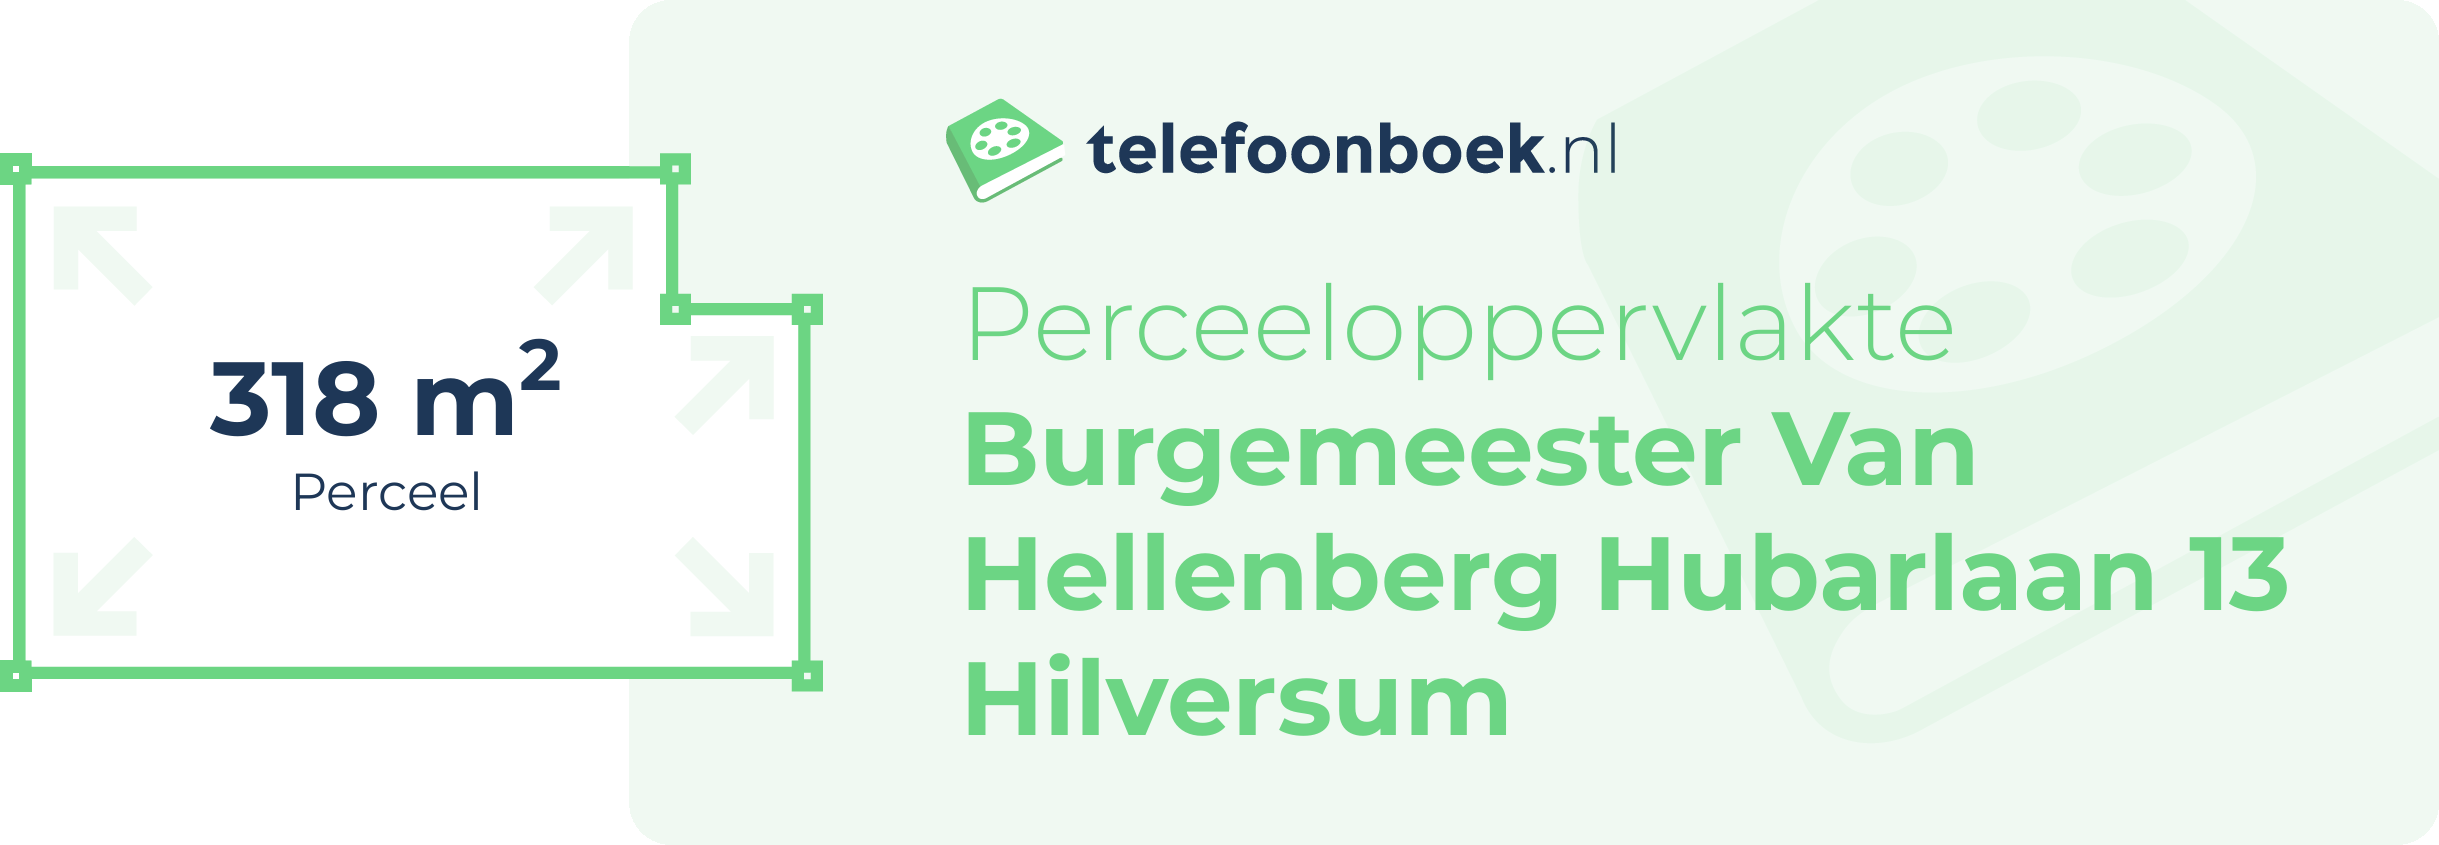 Perceeloppervlakte Burgemeester Van Hellenberg Hubarlaan 13 Hilversum